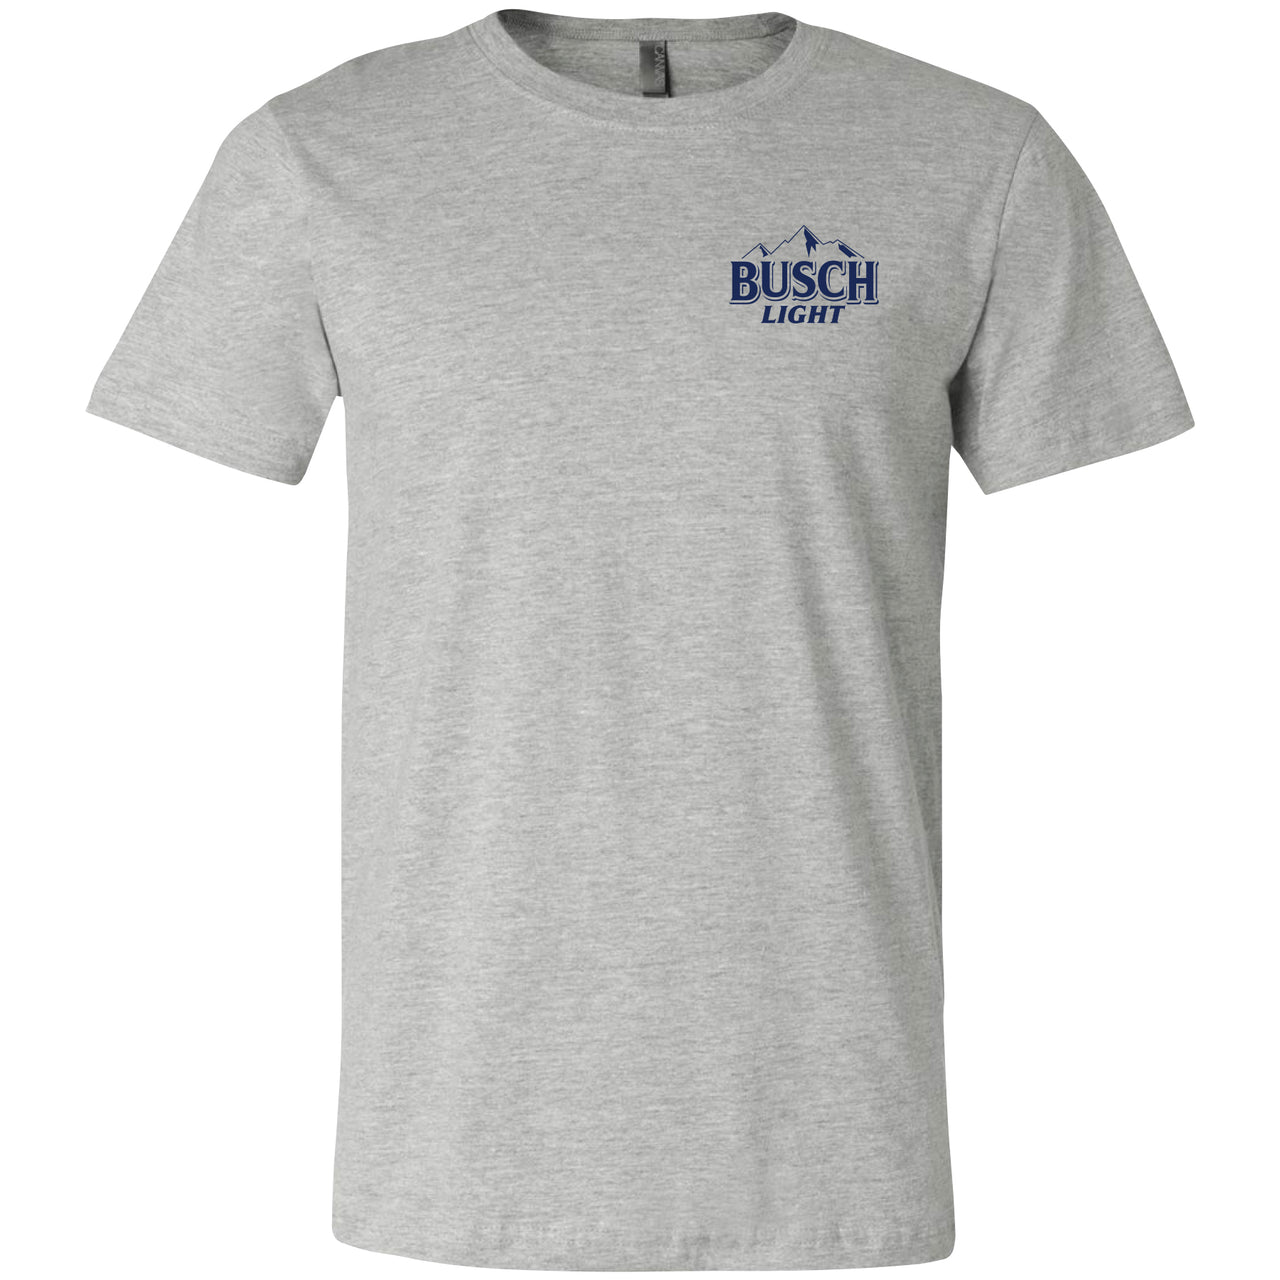 Busch Light Bad Day 2-Sided T-Shirt